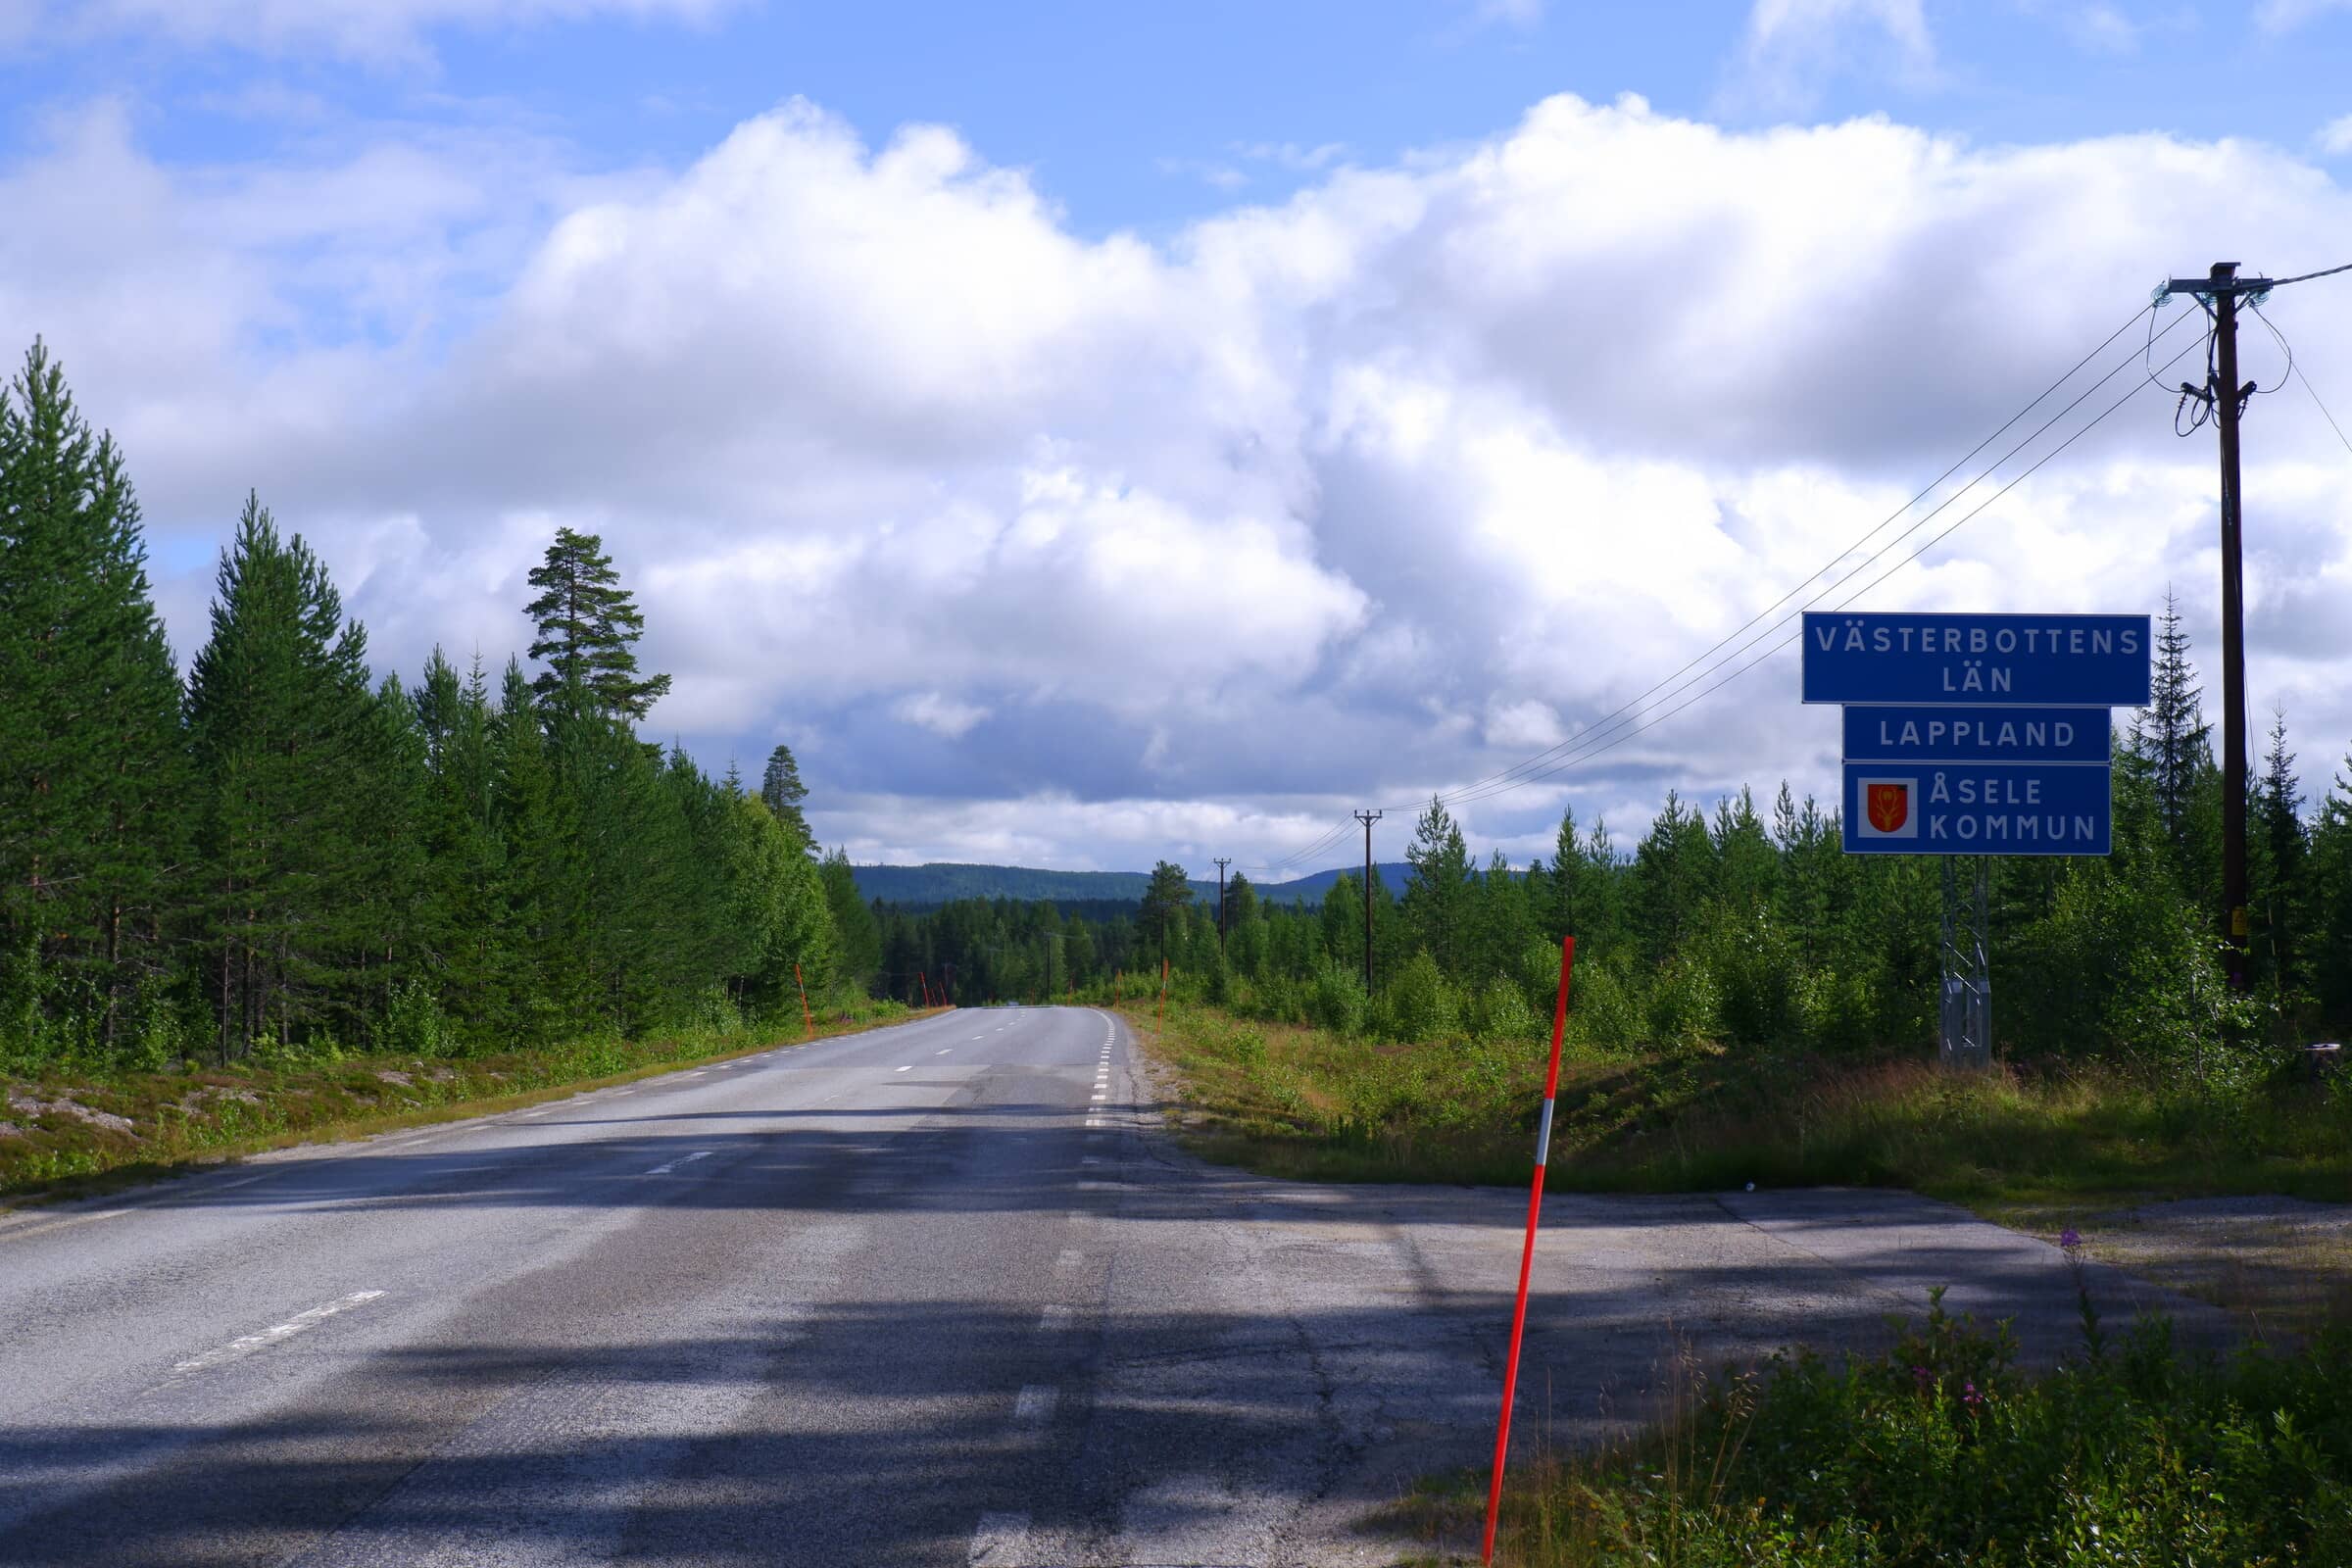 Asphalt road with a blue sign on the right side saying Västerbottens Län, Lappland, Åsele Kommun.